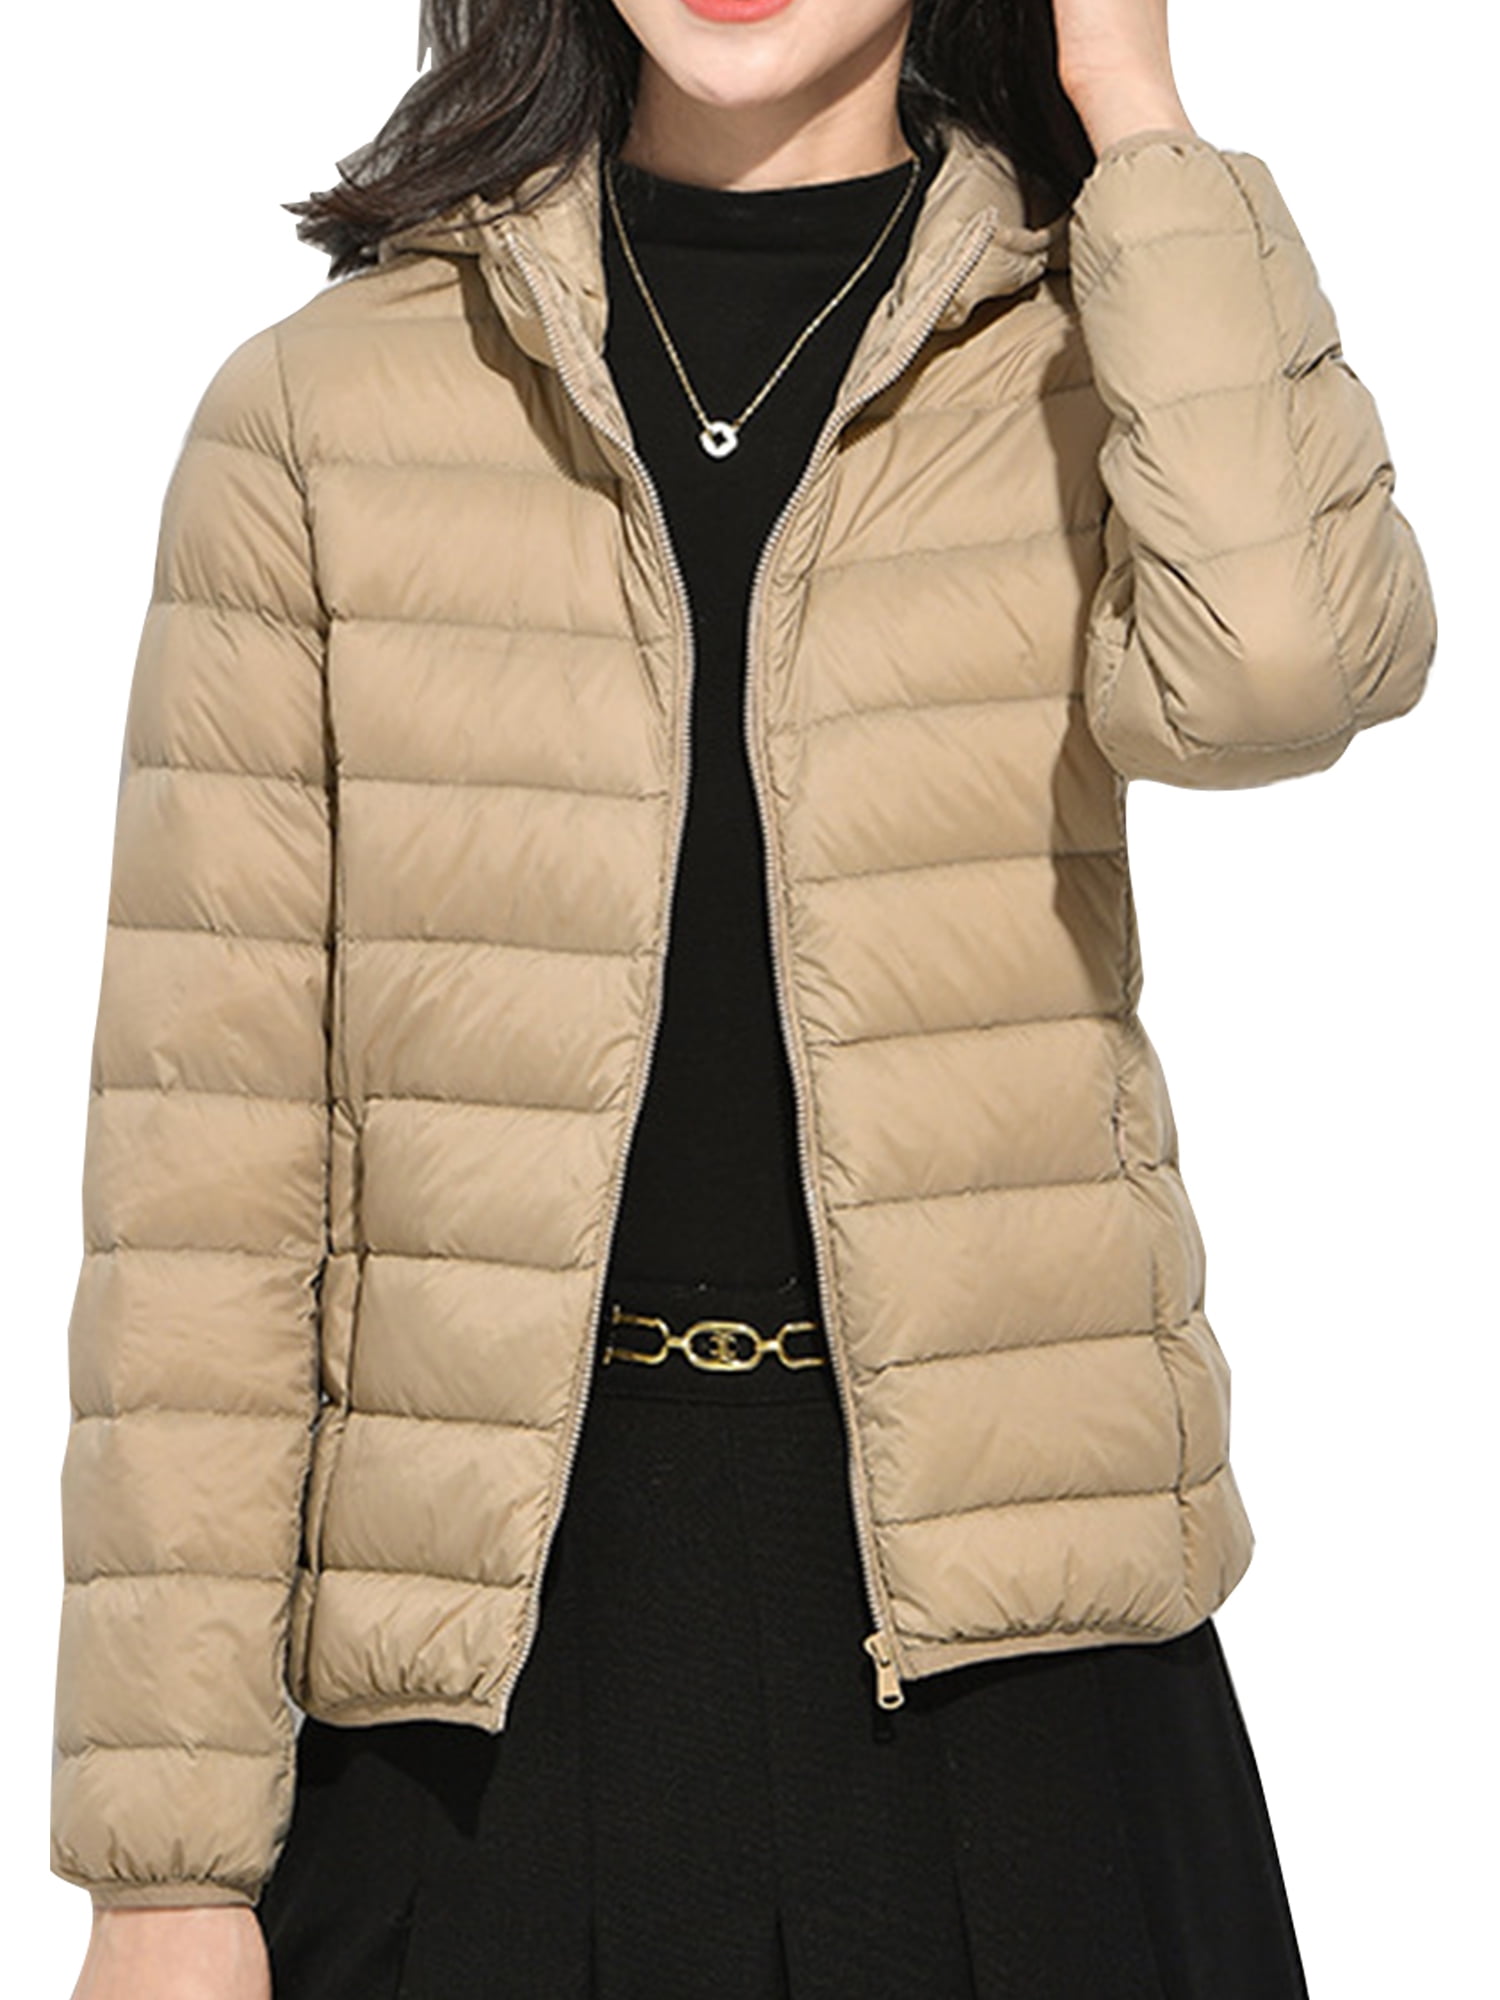 Cindysus Women Puffer Jacket Full Zip Coat Pocket Outwear Packable ...